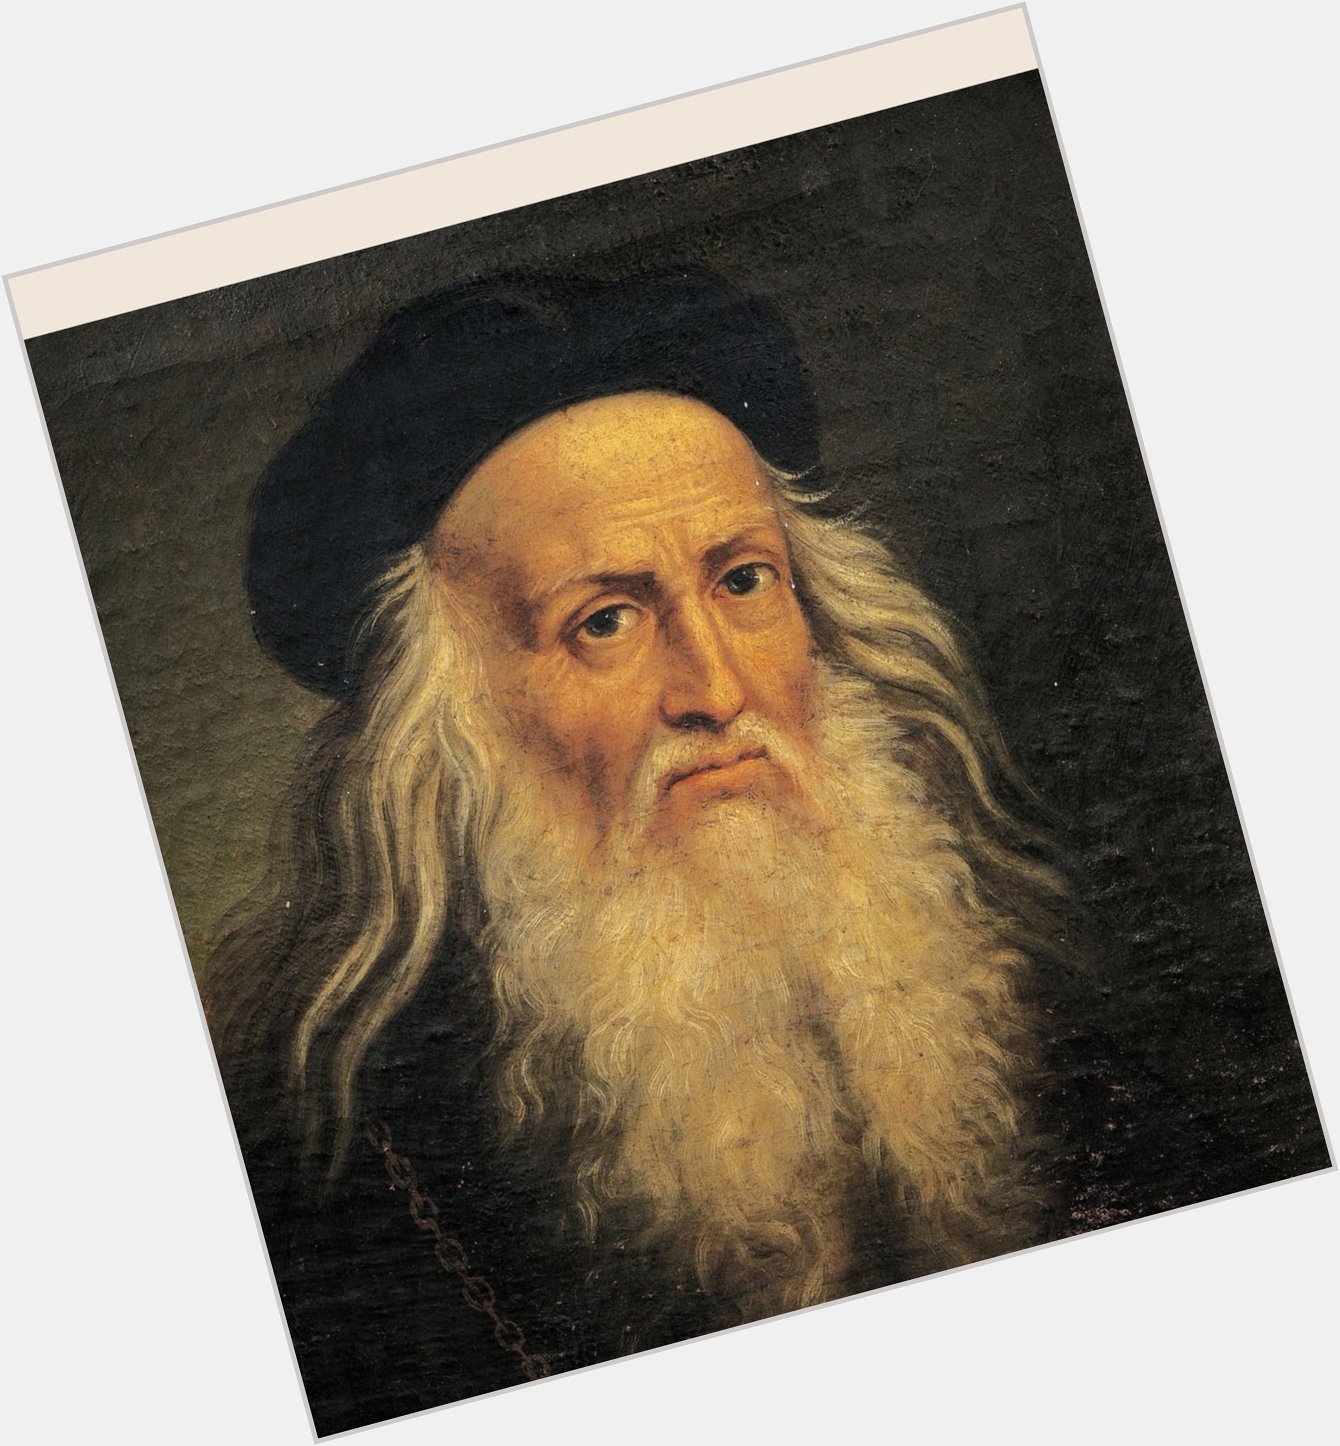 Happy birthday to Leonardo da Vinci and Seth Rogen! 